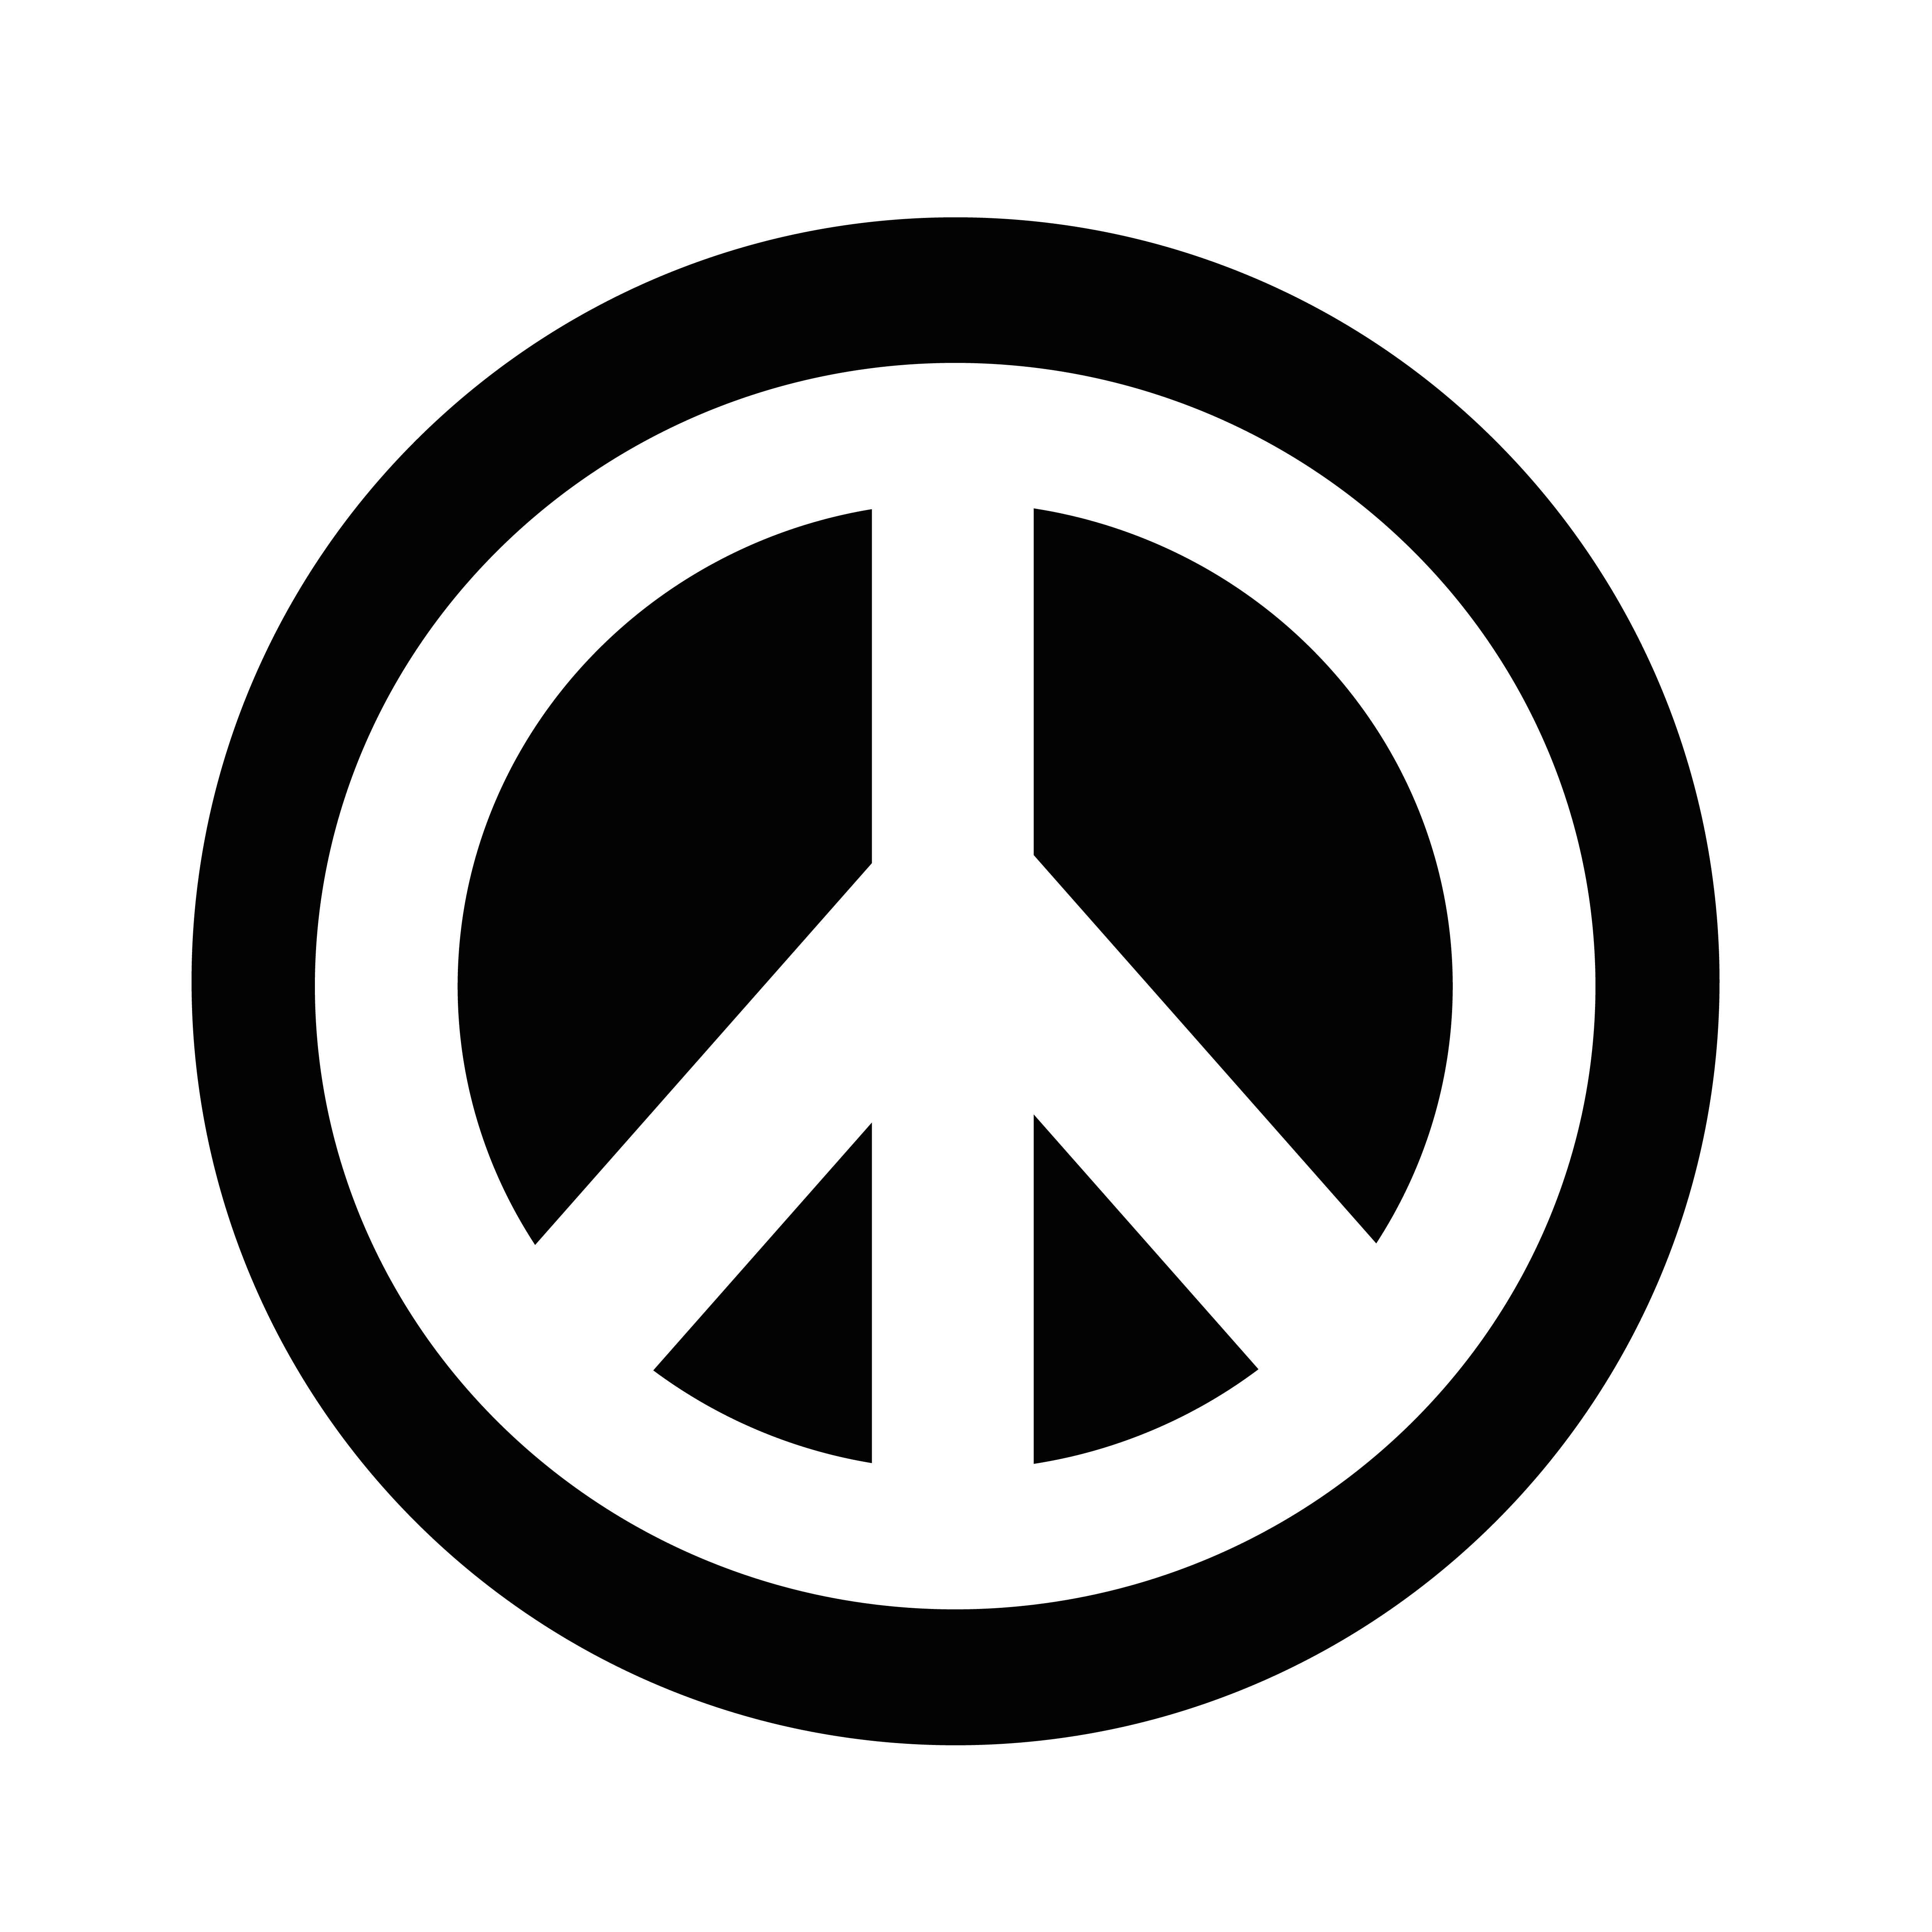 Hippie Peace Symbol icon 568201 - Download Free Vectors, Clipart